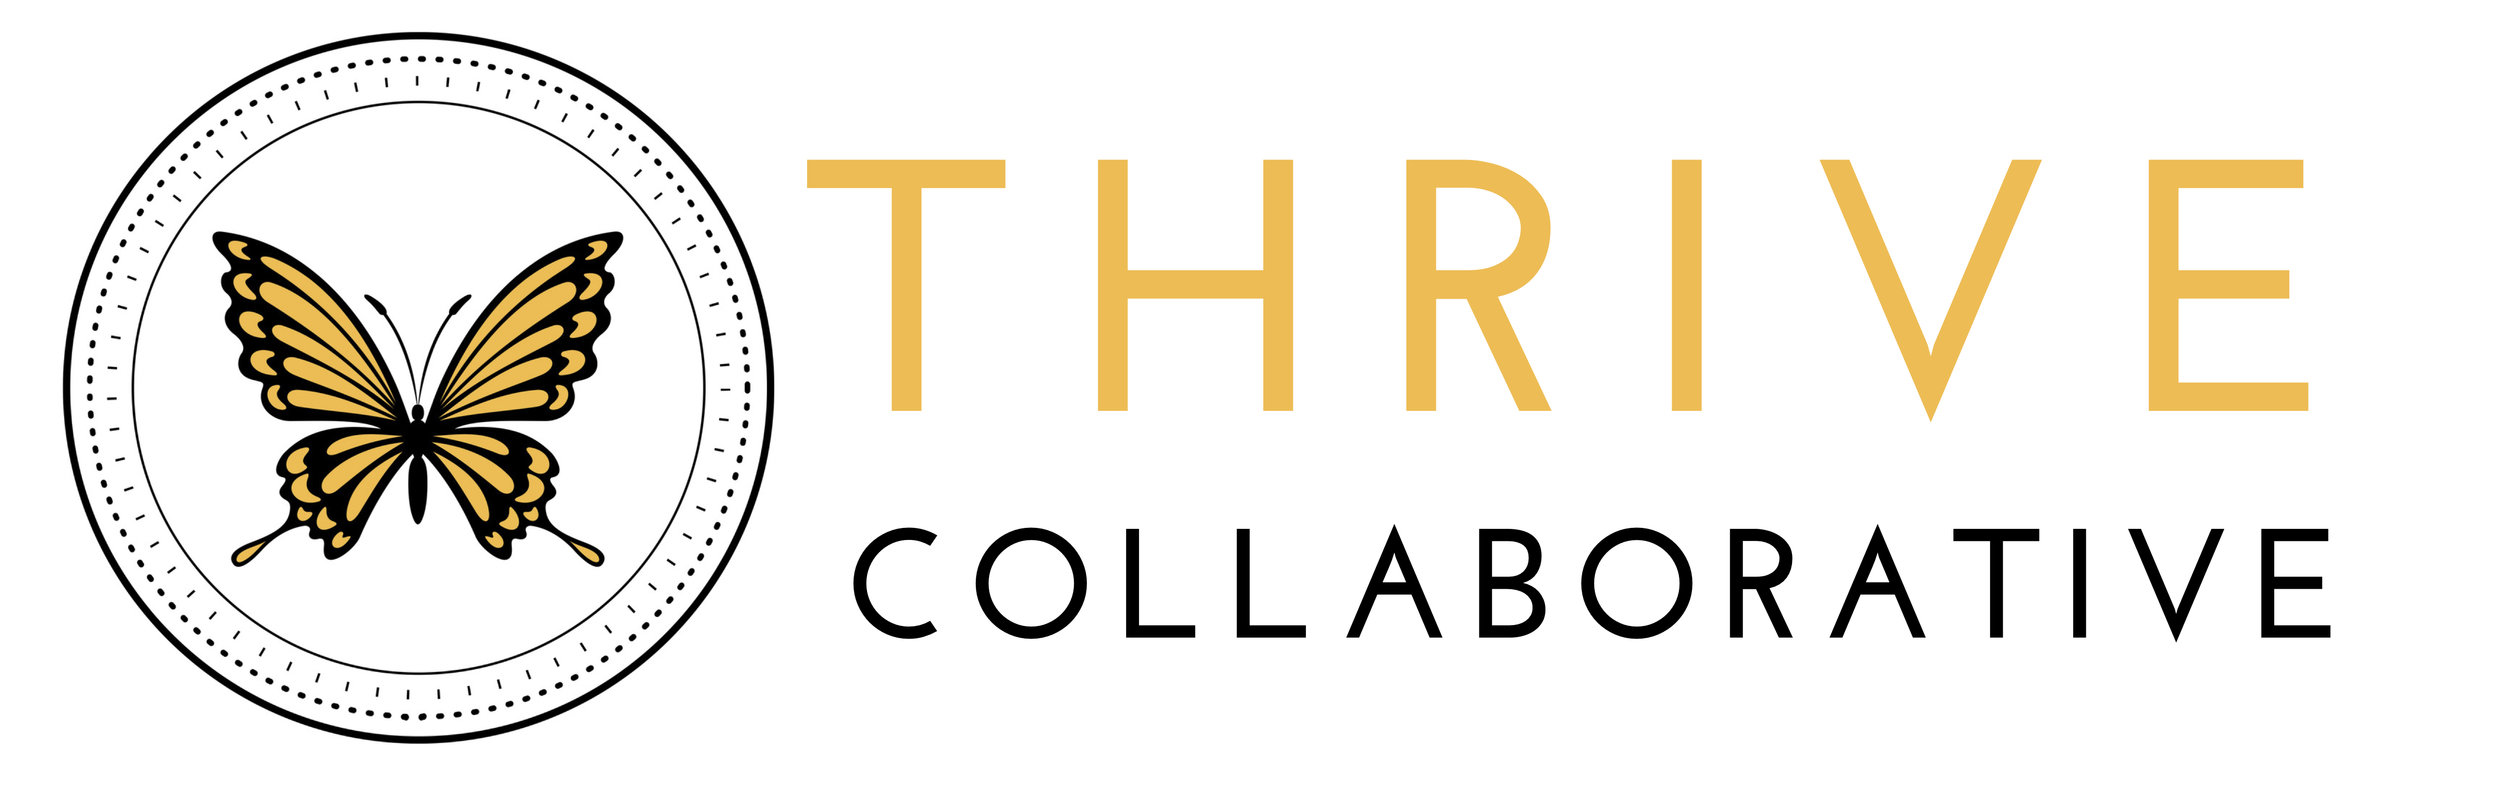 THRIVE Collaborative, LLC company logo